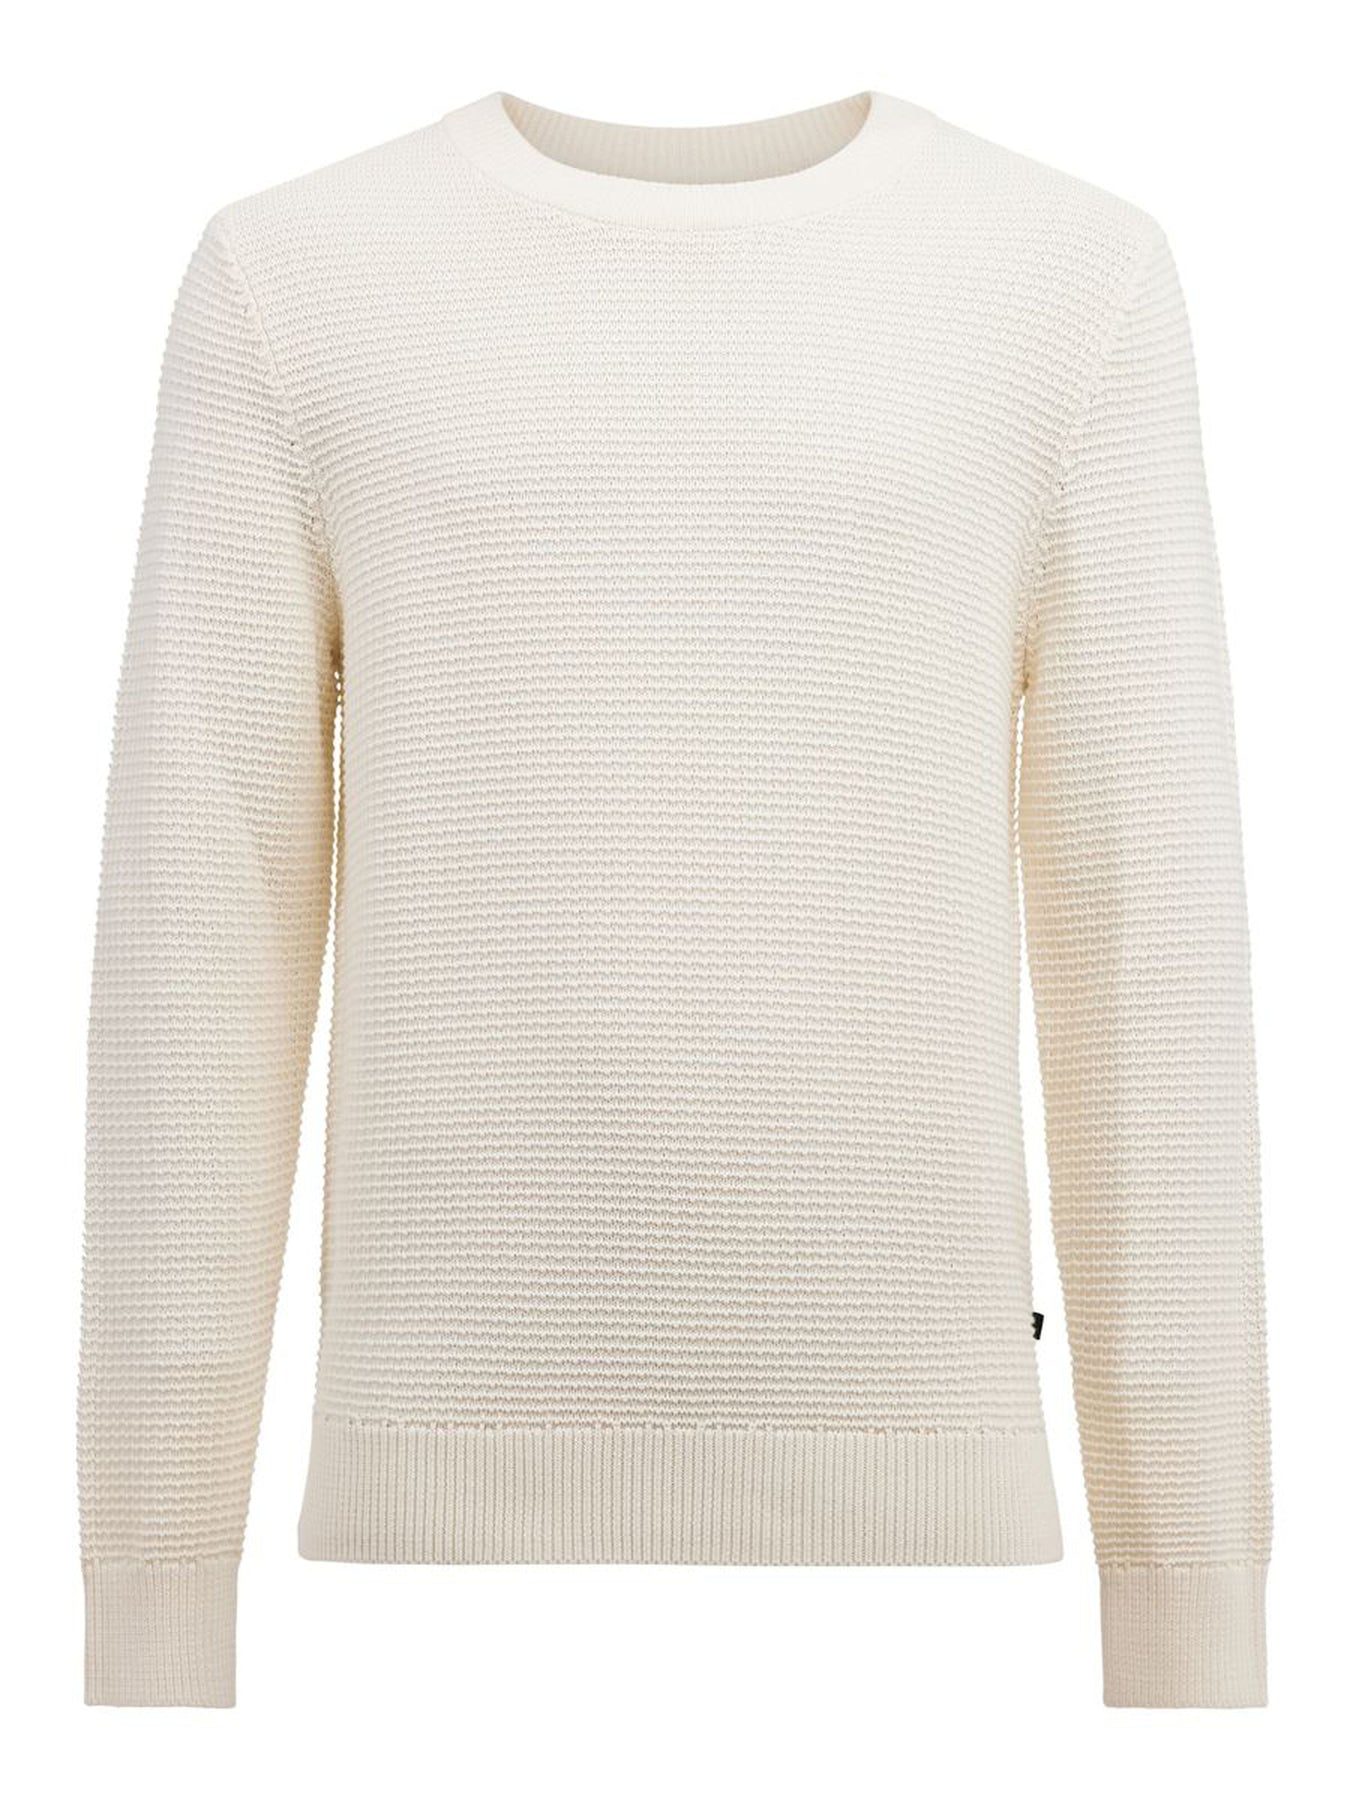 Archer Structure Sweater - Whisper White